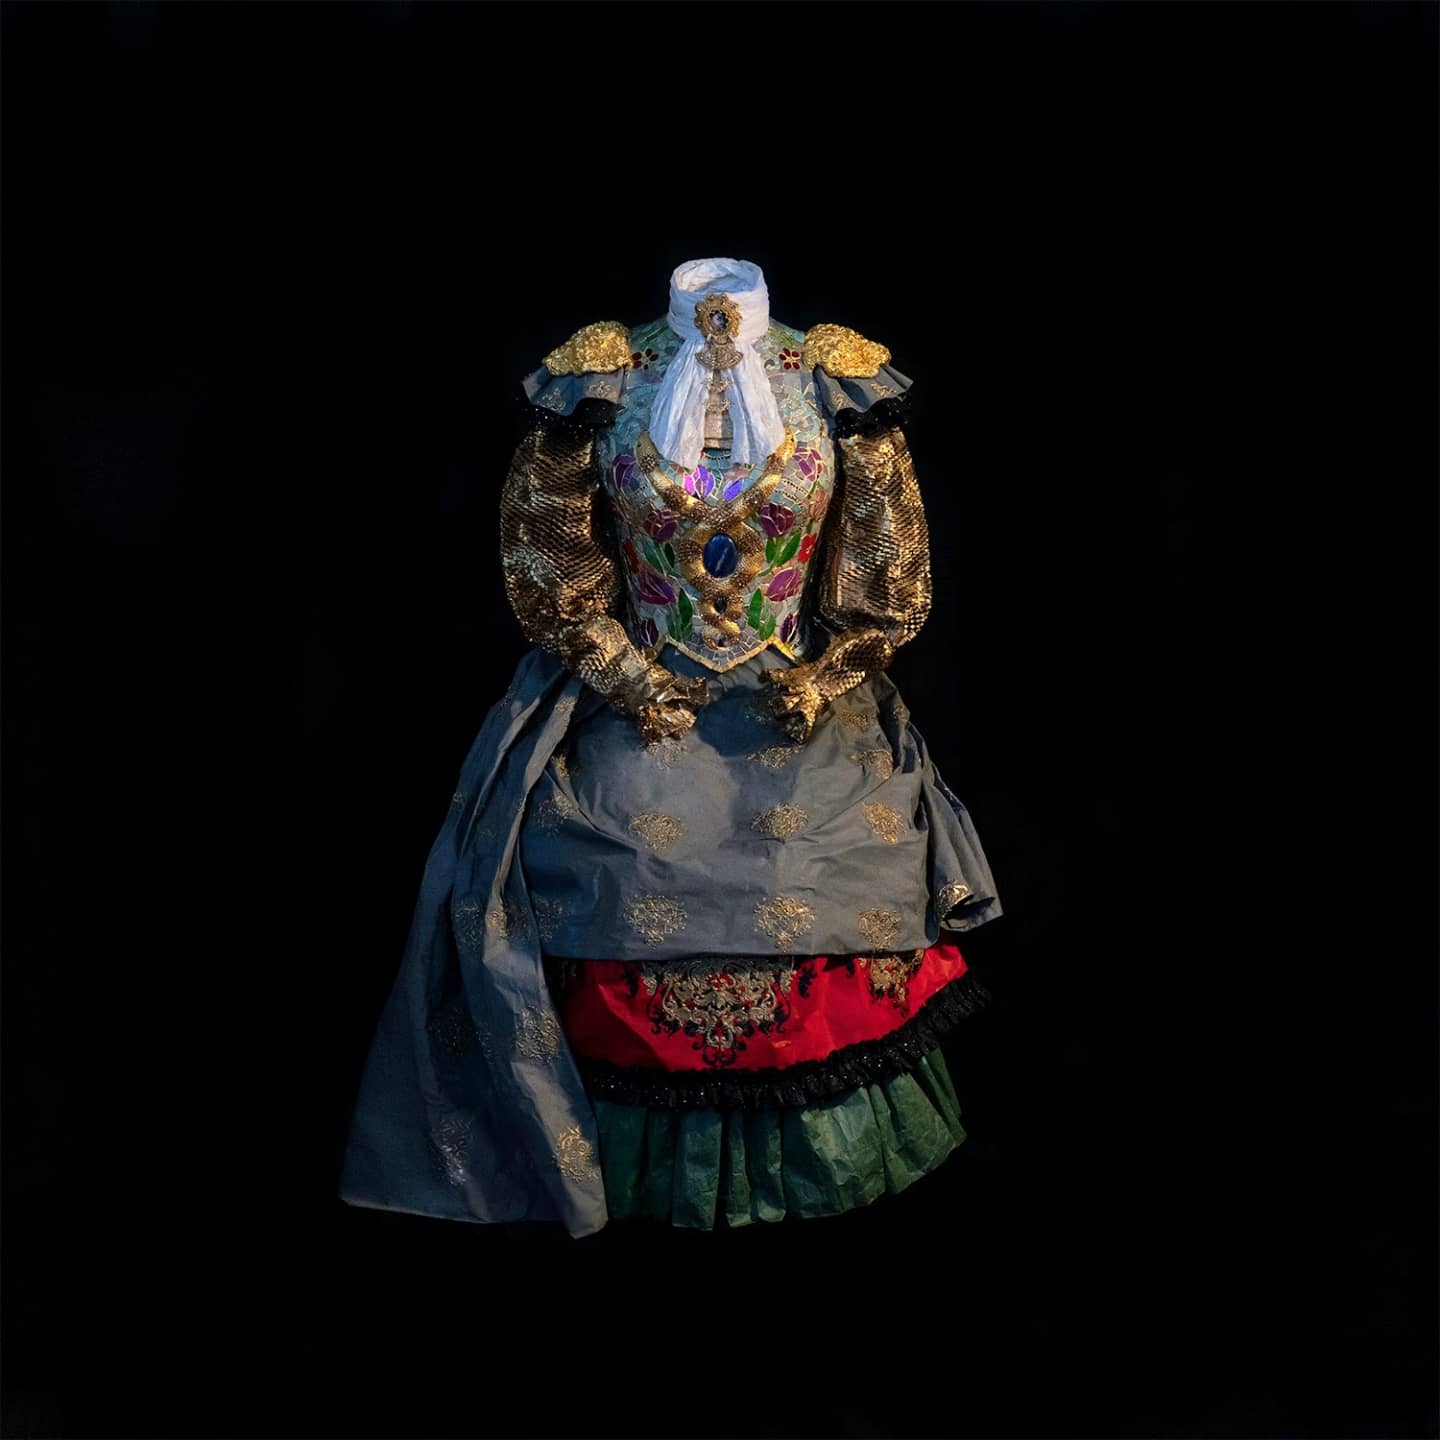 A headless mannikin dressed in ornate 19th-century women's clothing, set against a dark background.